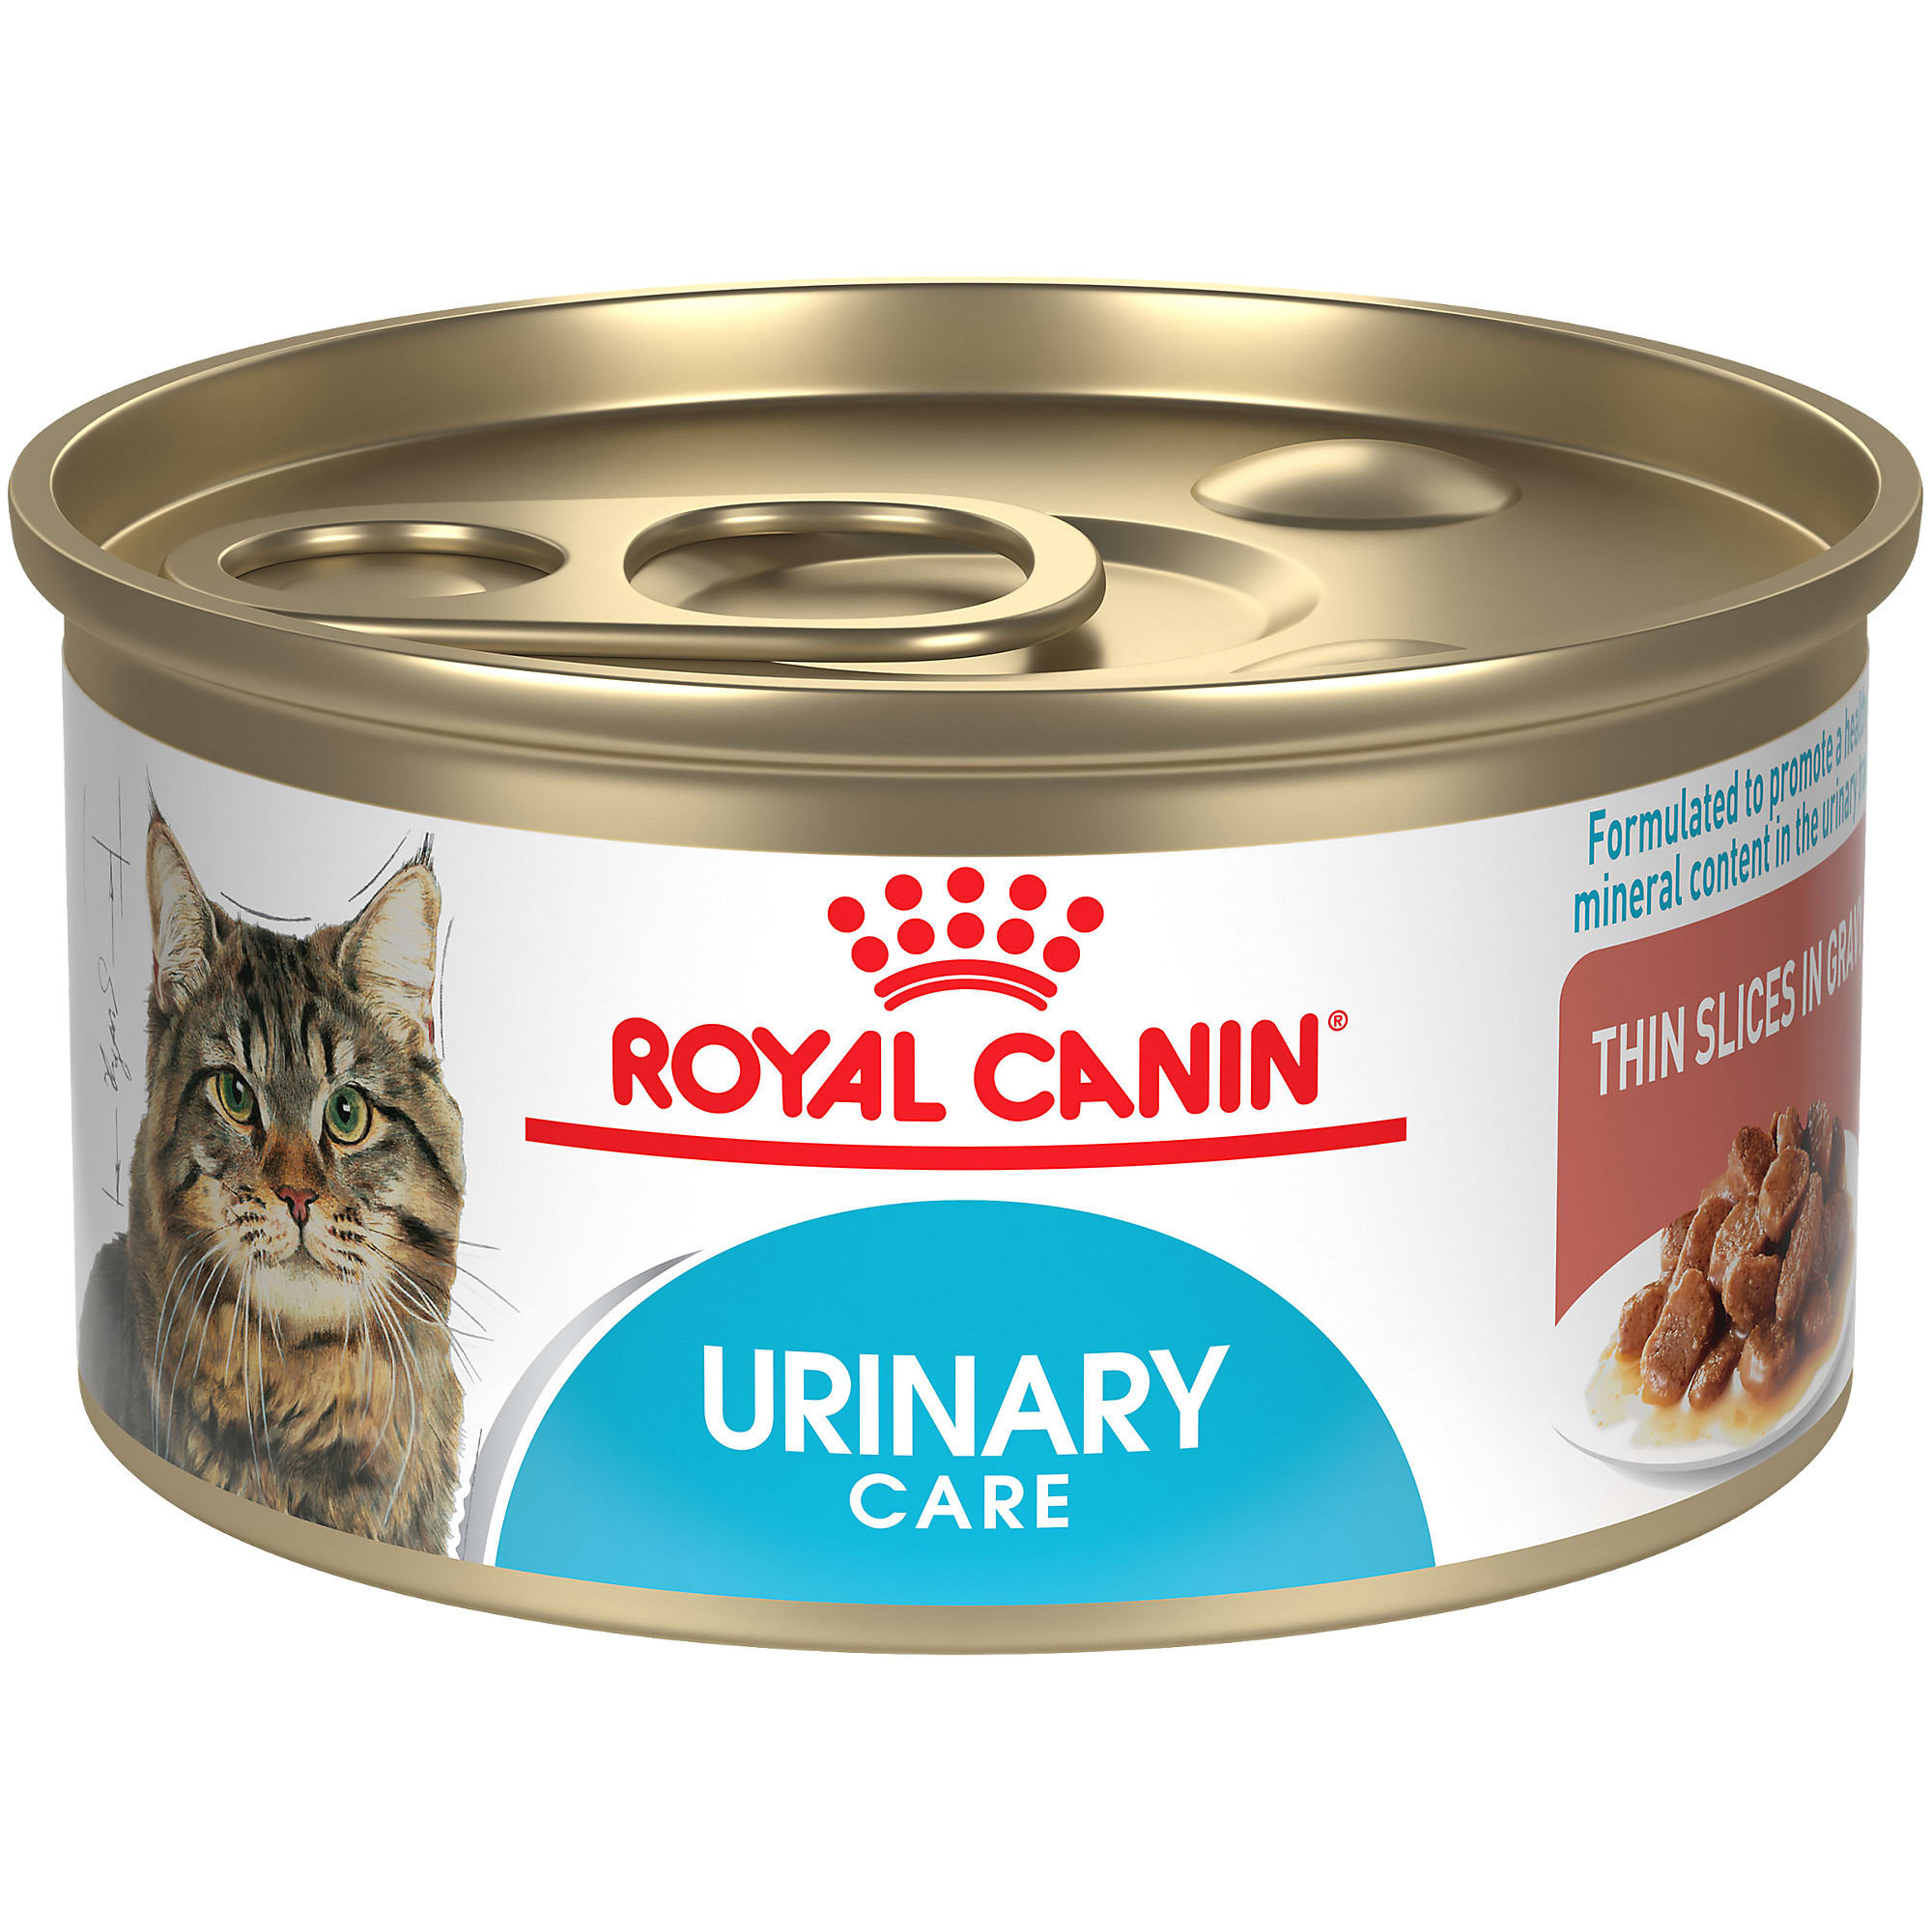 Urinary care cat food